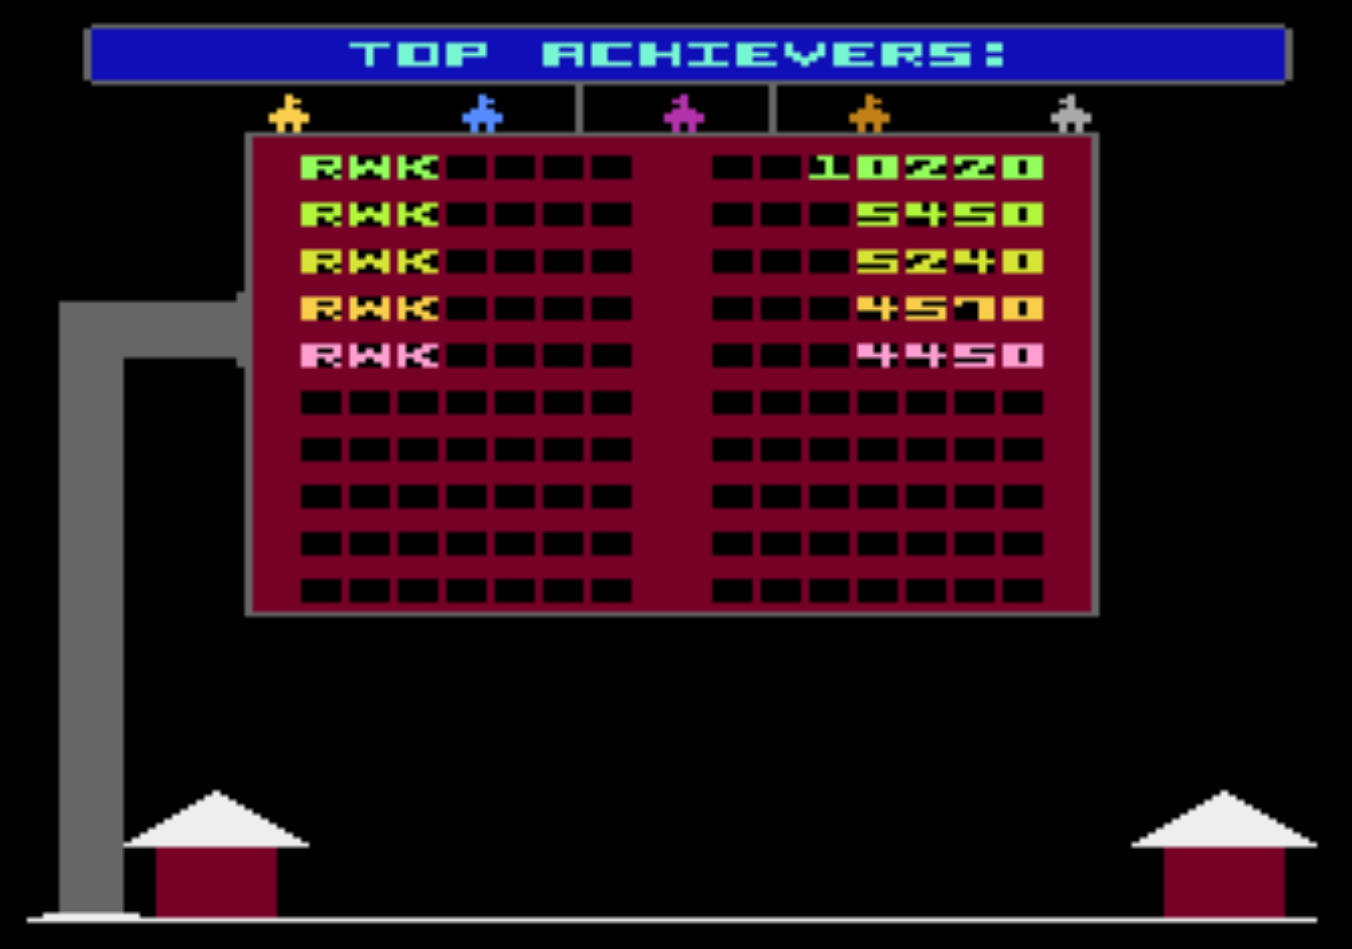 cncfreak: Bounty Bob Strikes Back! (Atari 400/800/XL/XE Emulated) 10,220 points on 2013-09-22 20:20:58